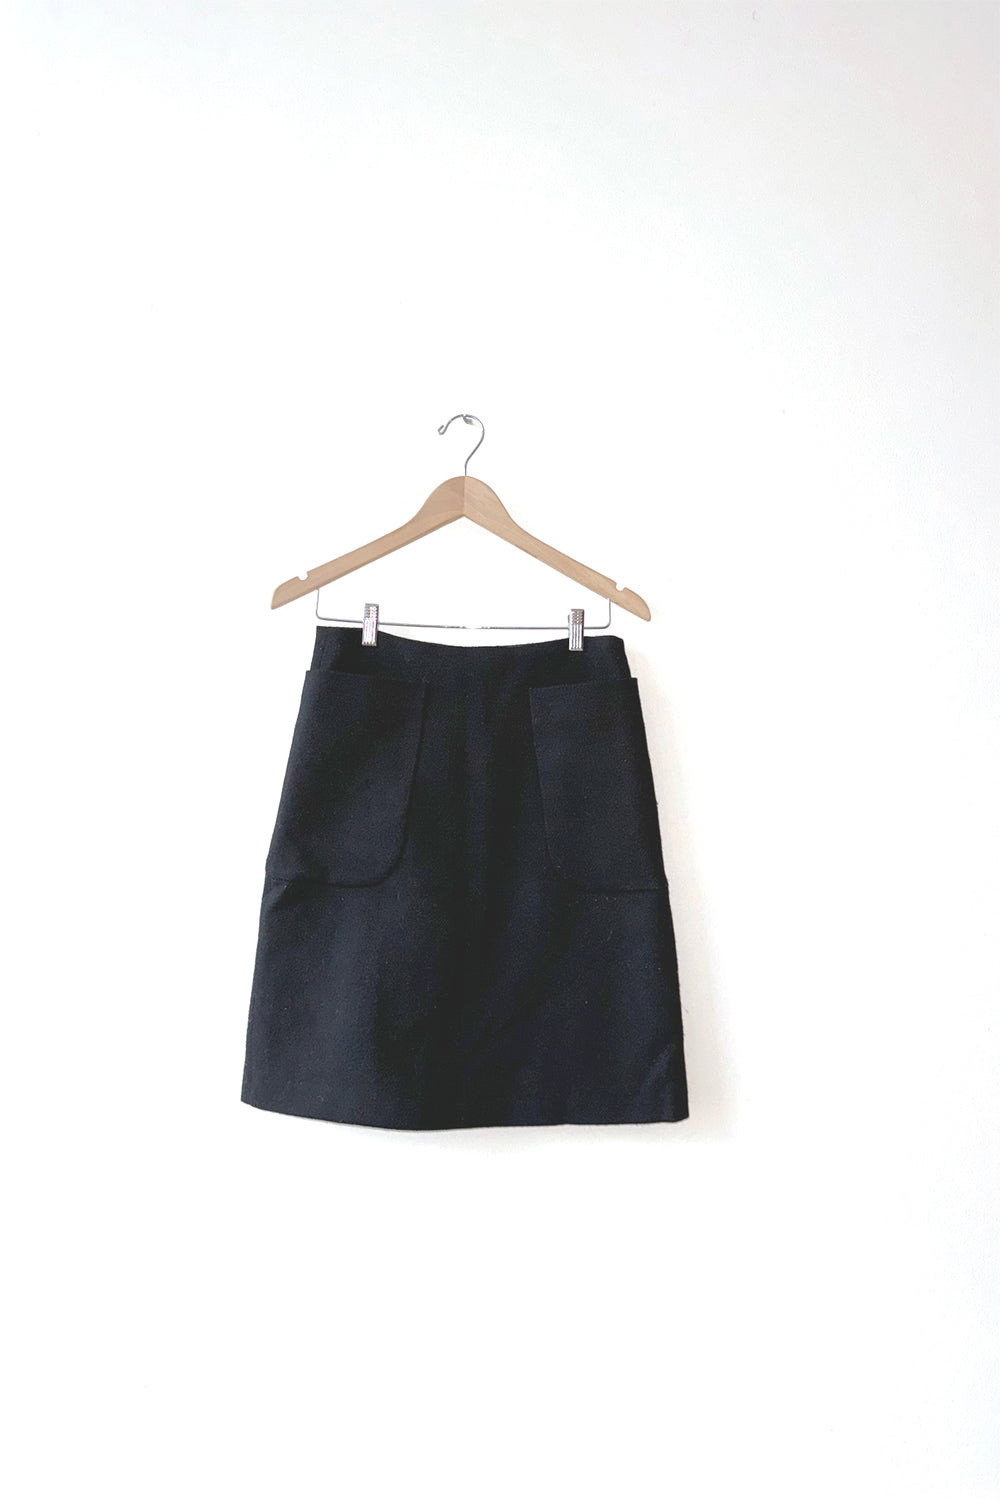 Nygardsanna Black Wool Skirt (gently worn)